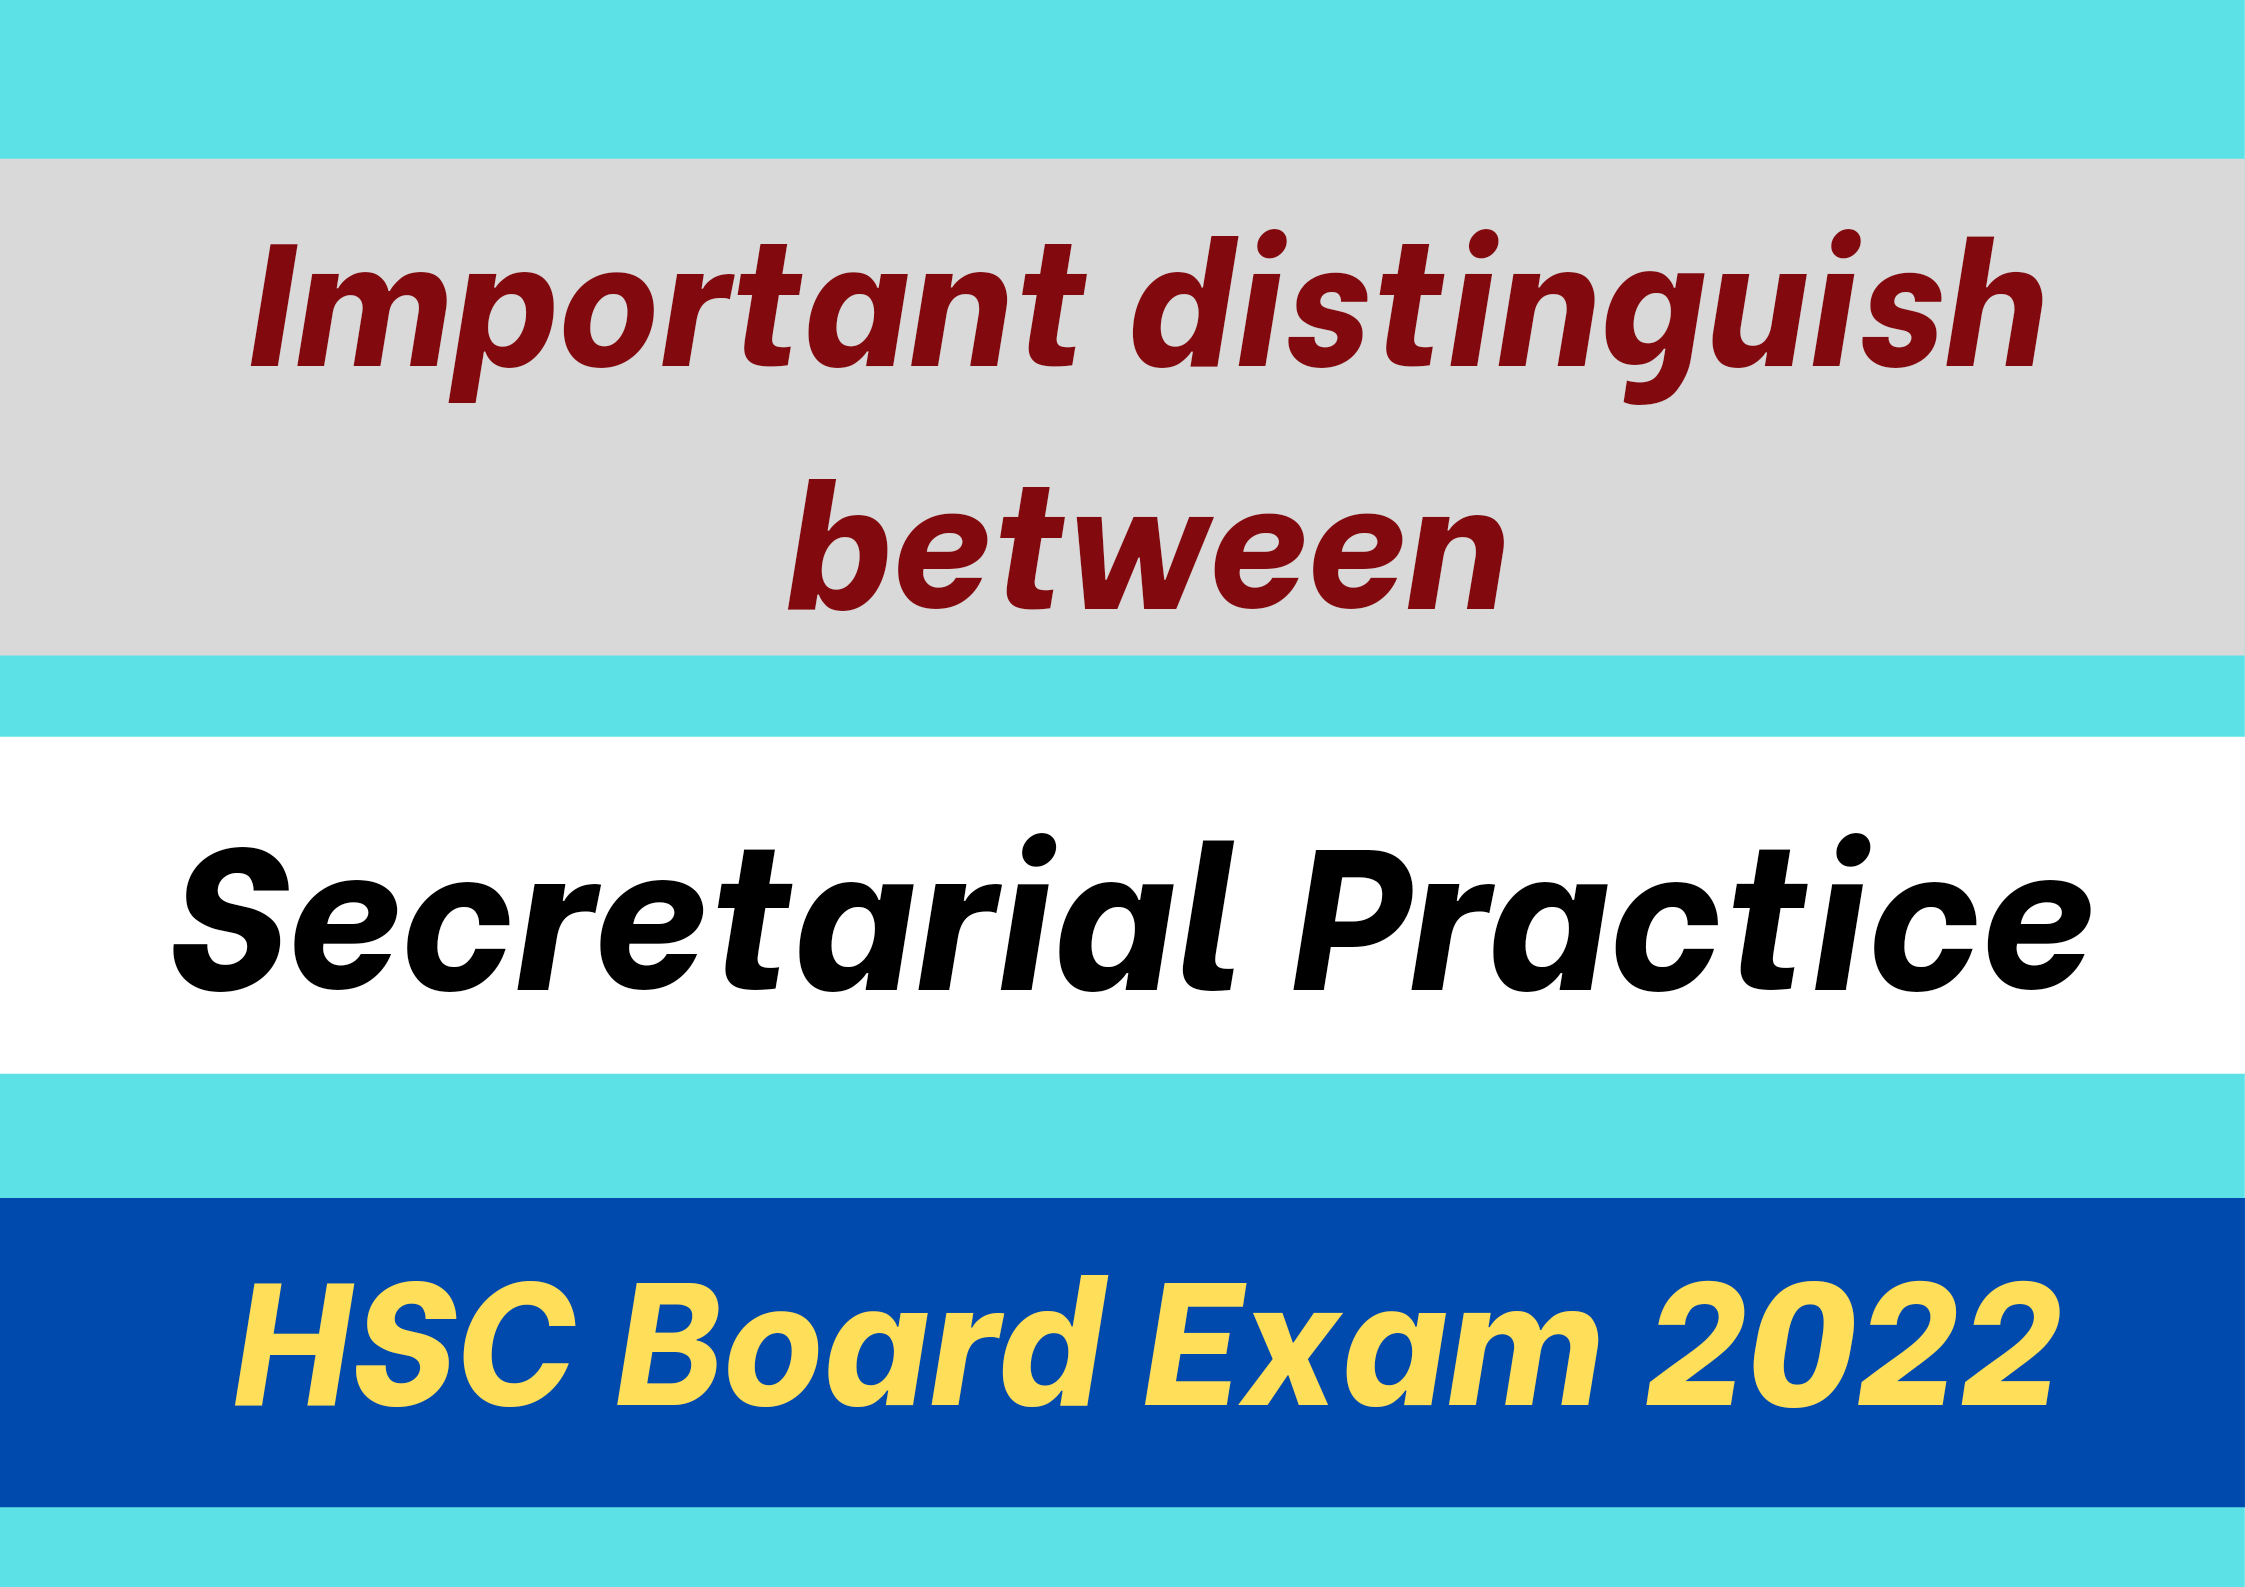 SP important distinguish between: Secretarial Practice HSC Board Exam 2022